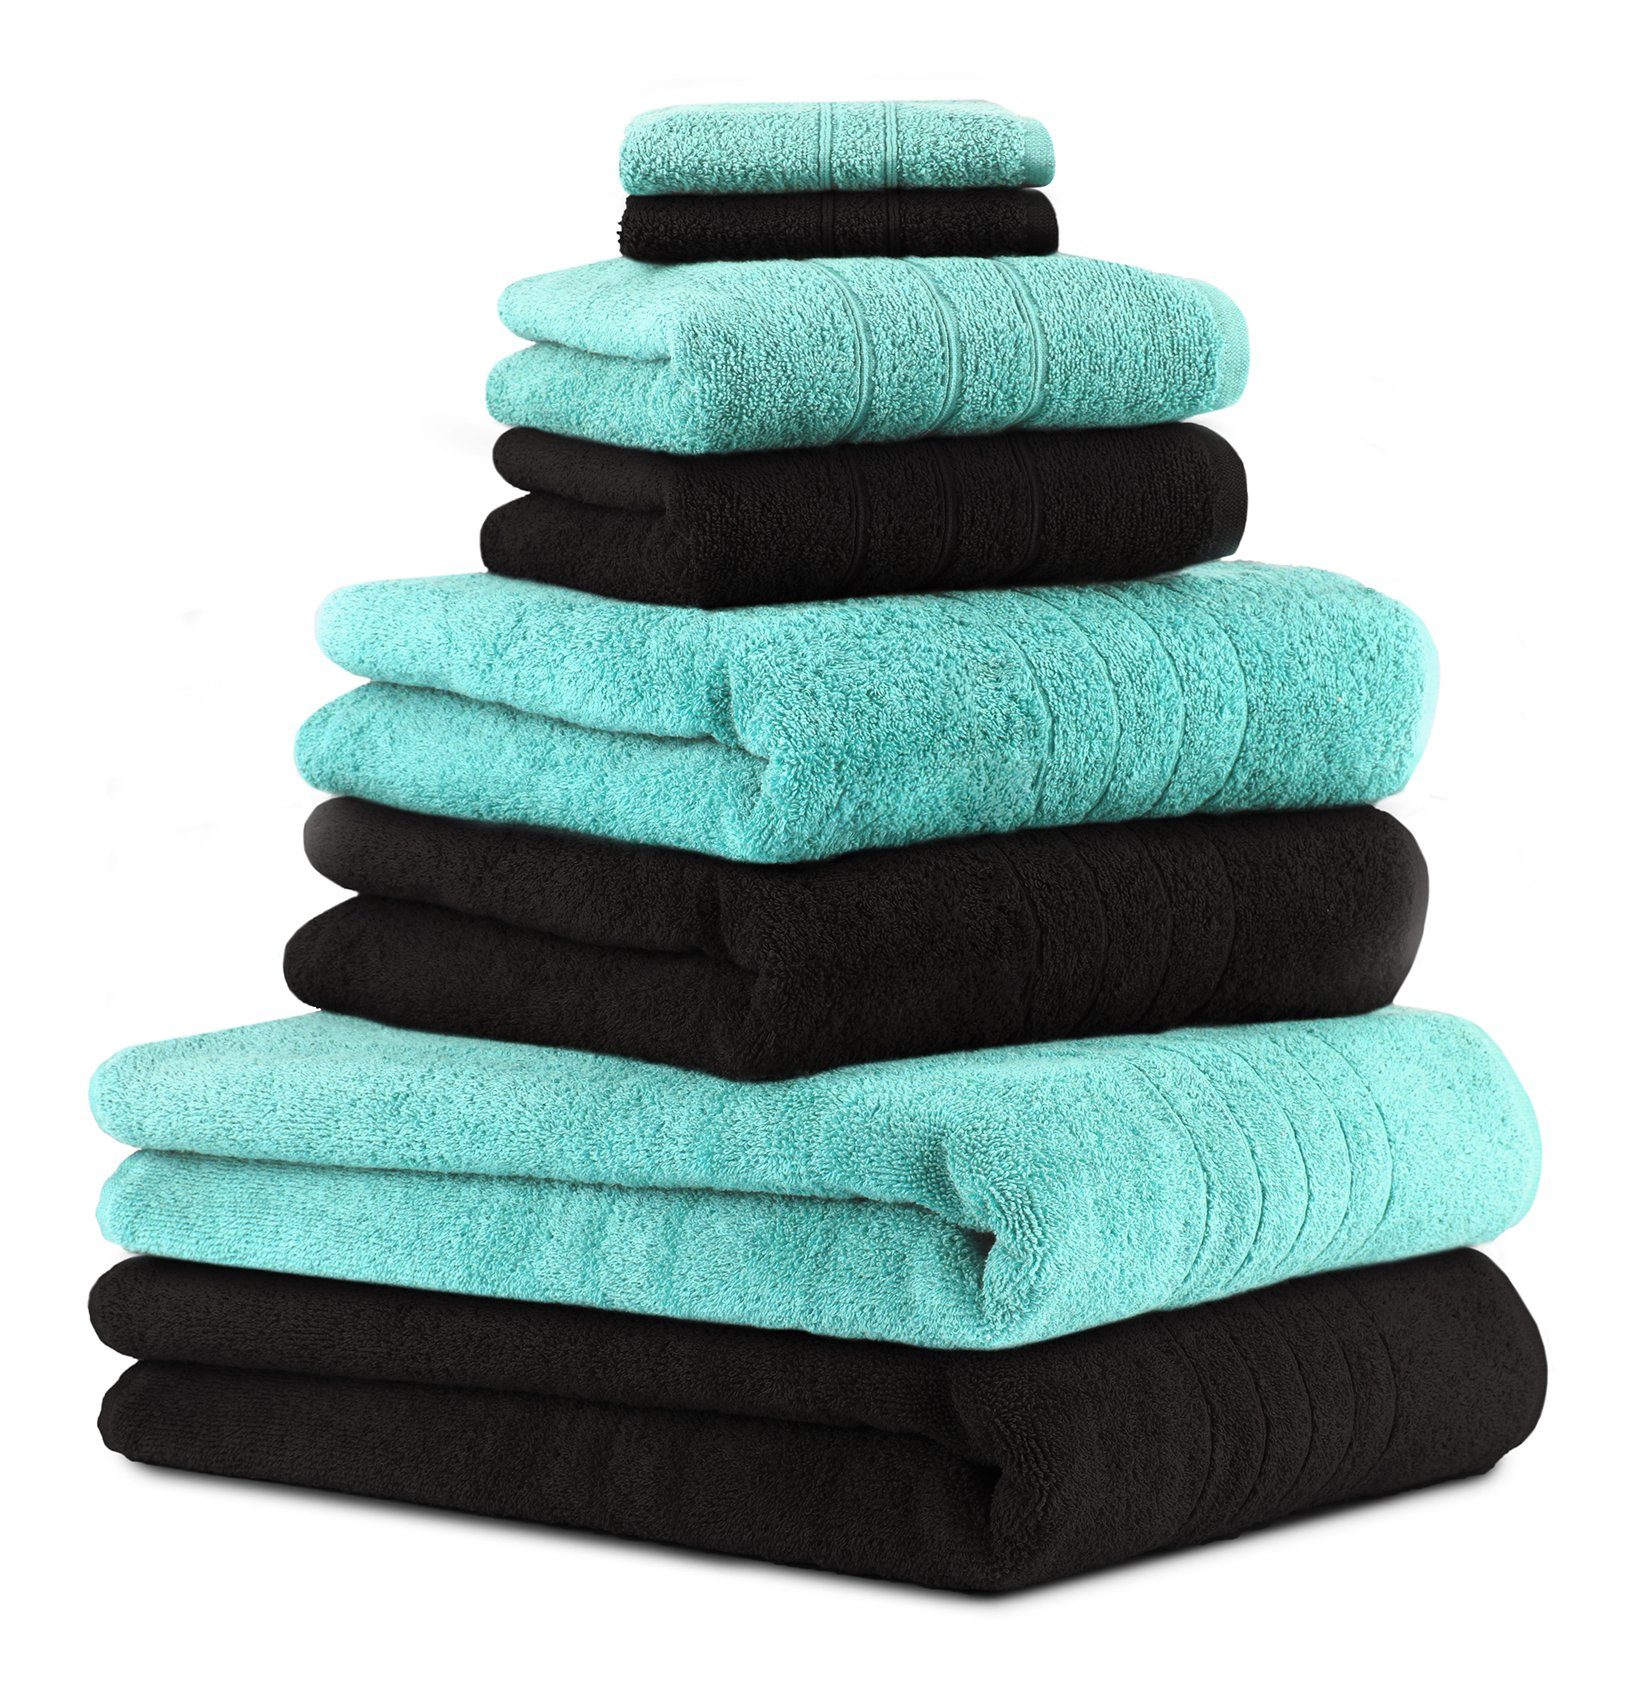 Betz Handtuch Set 8-TLG. Handtuch-Set Deluxe 100% Baumwolle 2 Badetücher 2 Duschtücher 2 Handtücher 2 Seiftücher Farbe türkis und schwarz, 100% Baumwolle, (8-tlg)